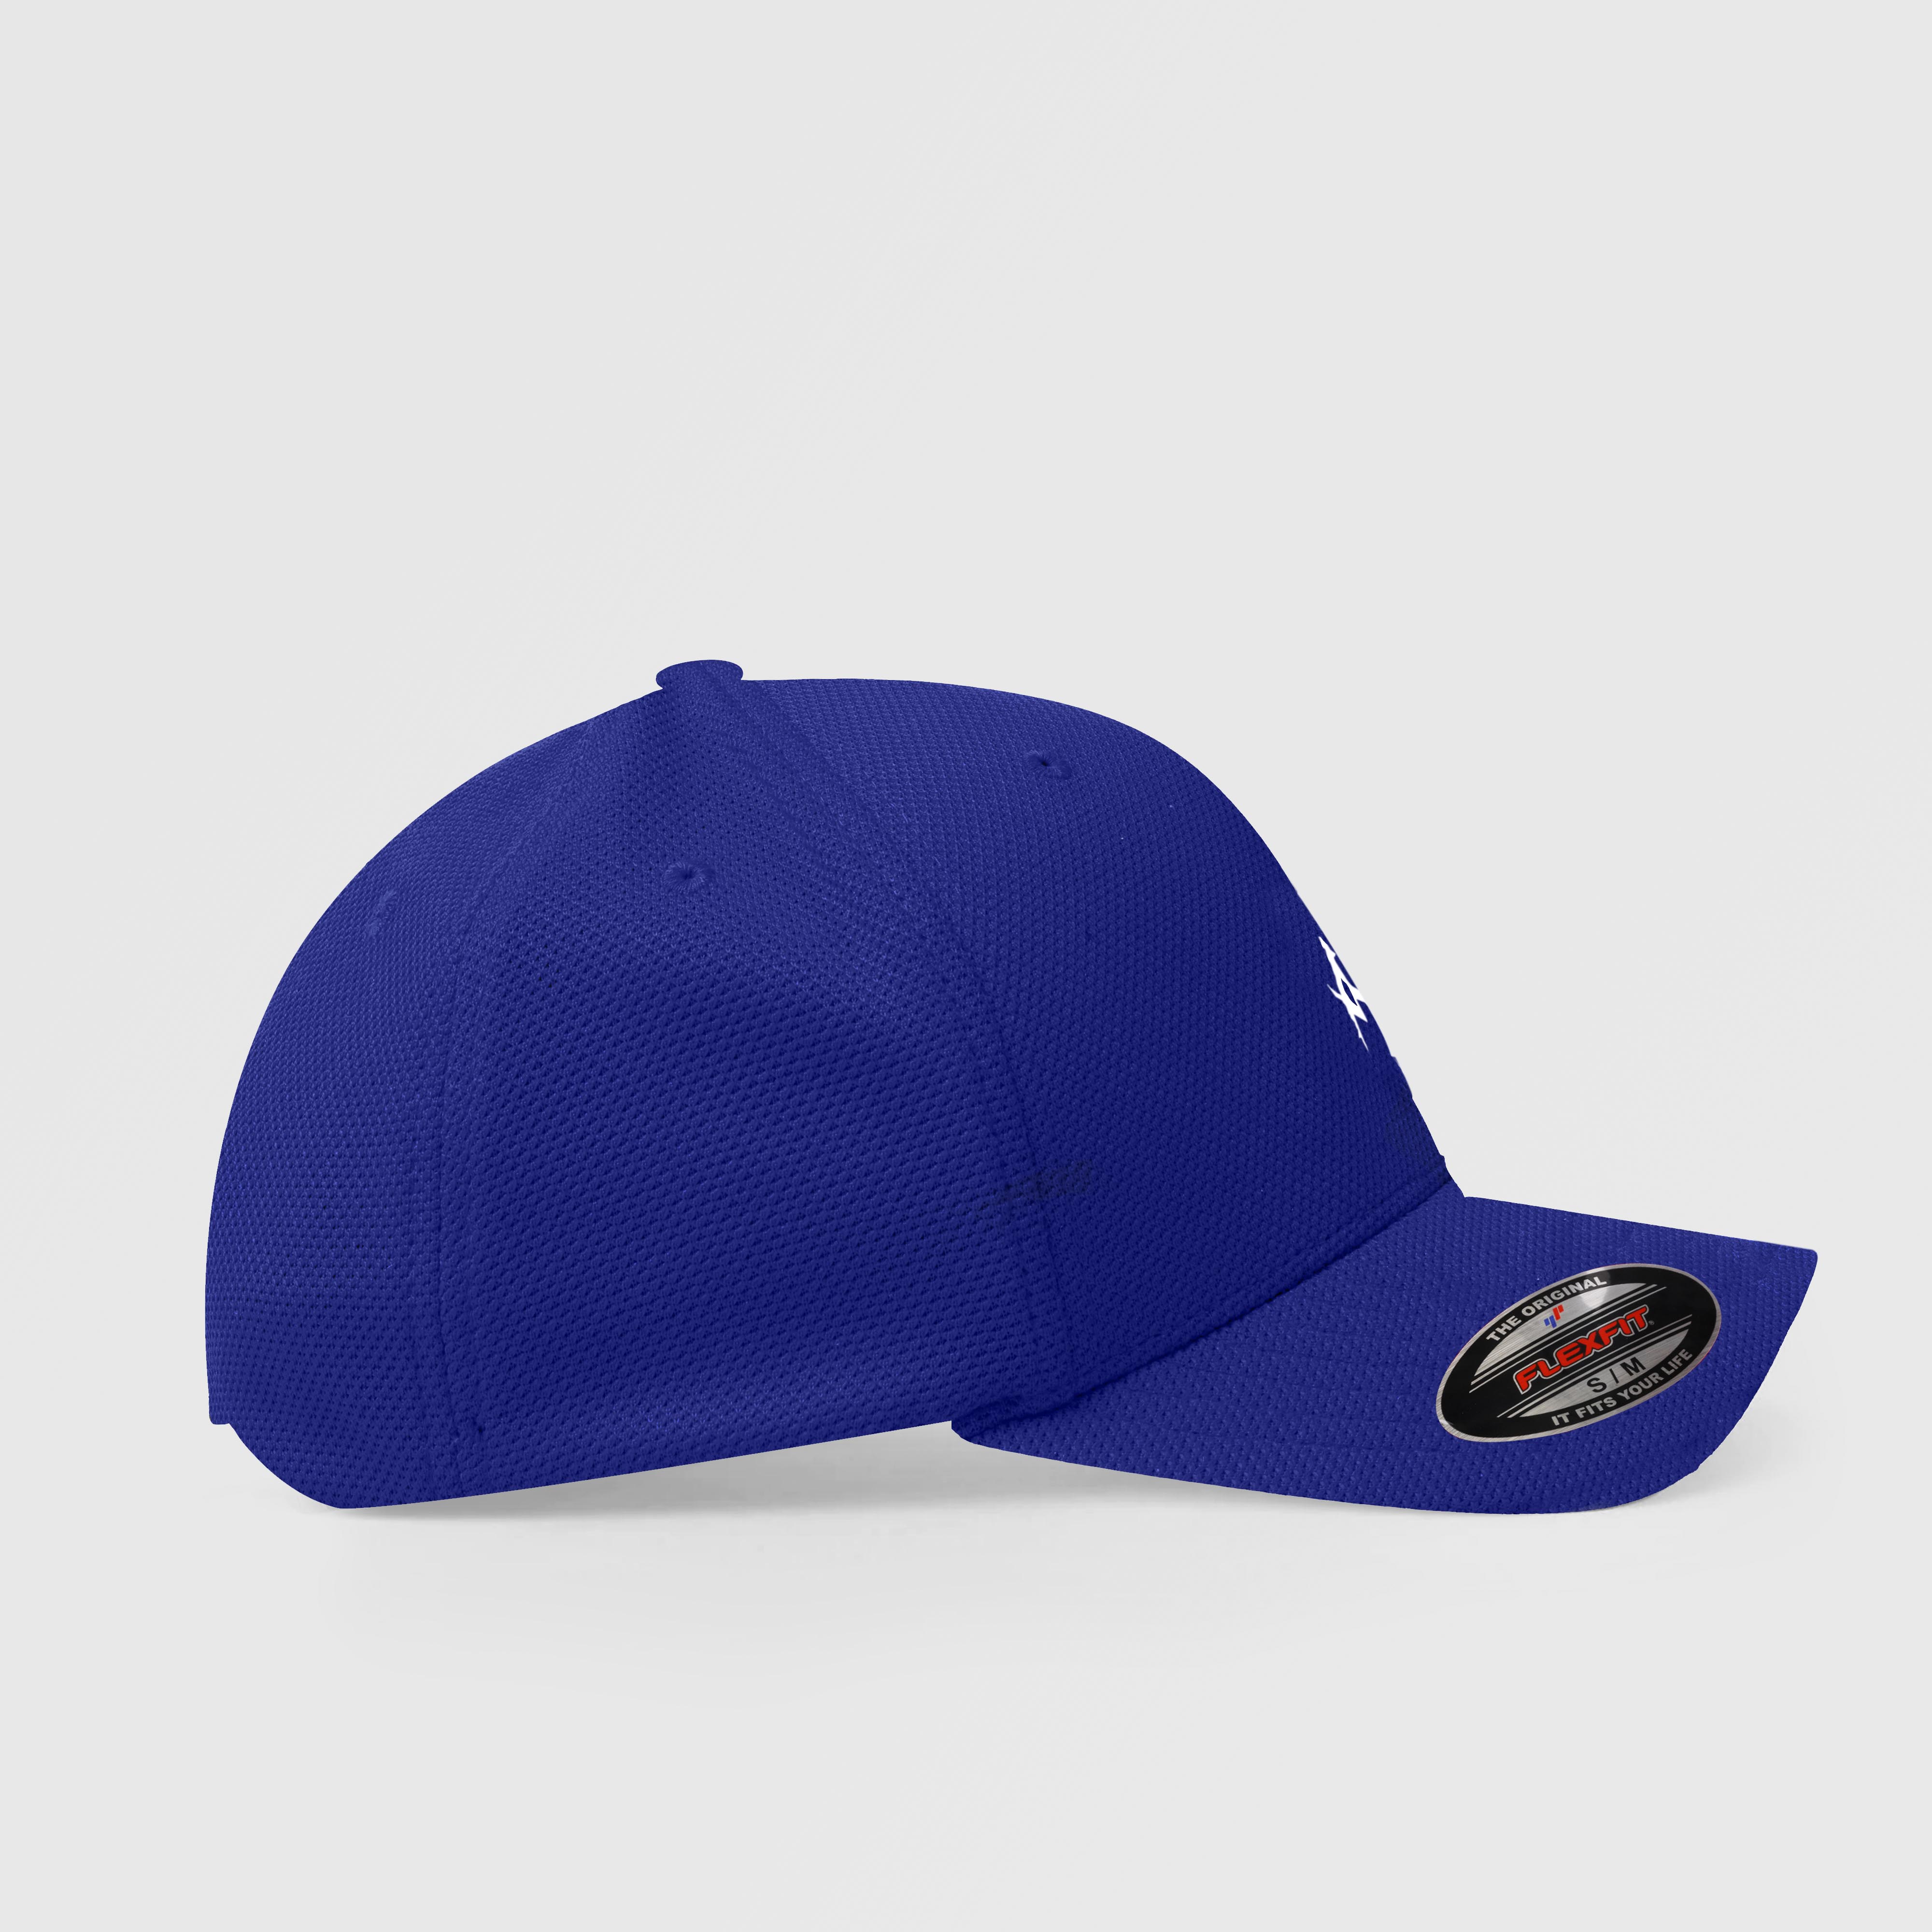 Pro Profile GA Cap (Blue)